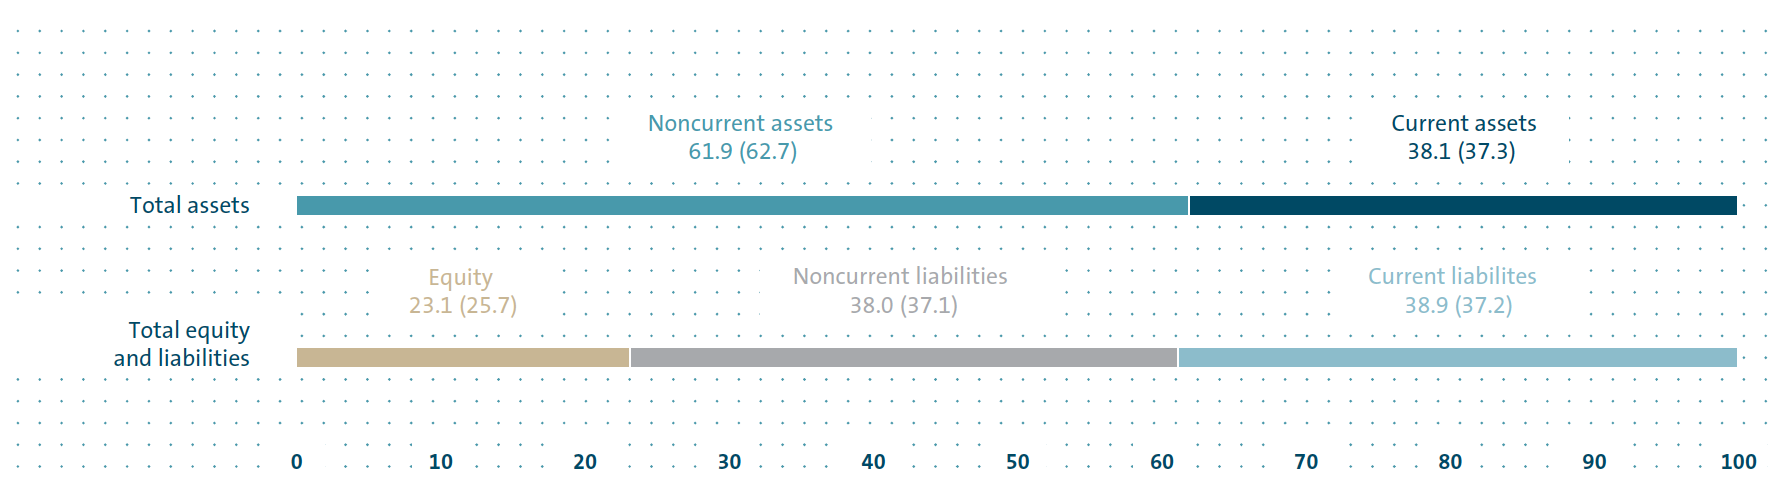 Consolidated balance sheet structure 2015 (bar chart)